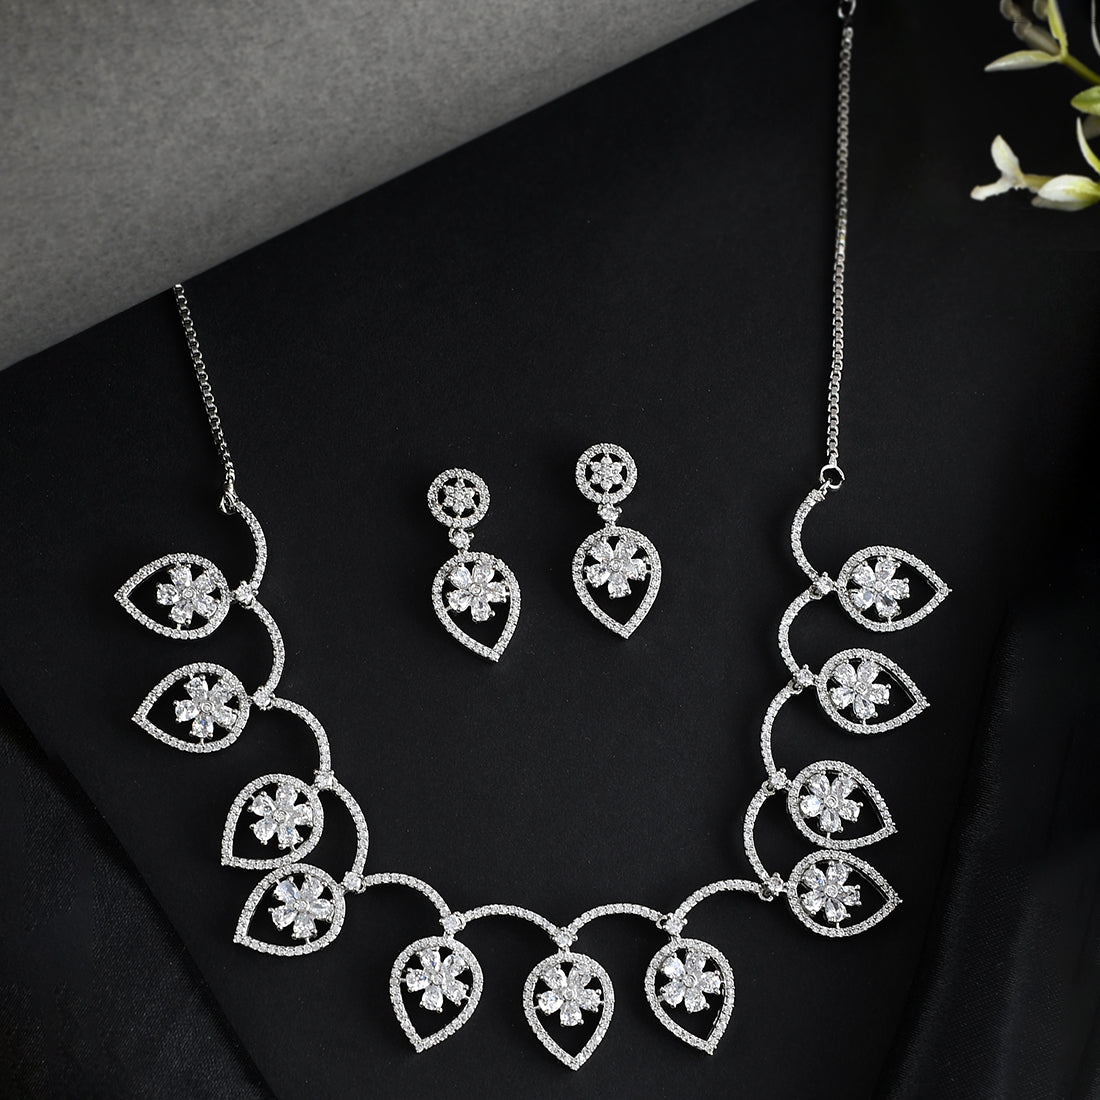 Women's Cz Elegance Leaf Shaped Silver Necklace Set - Voylla